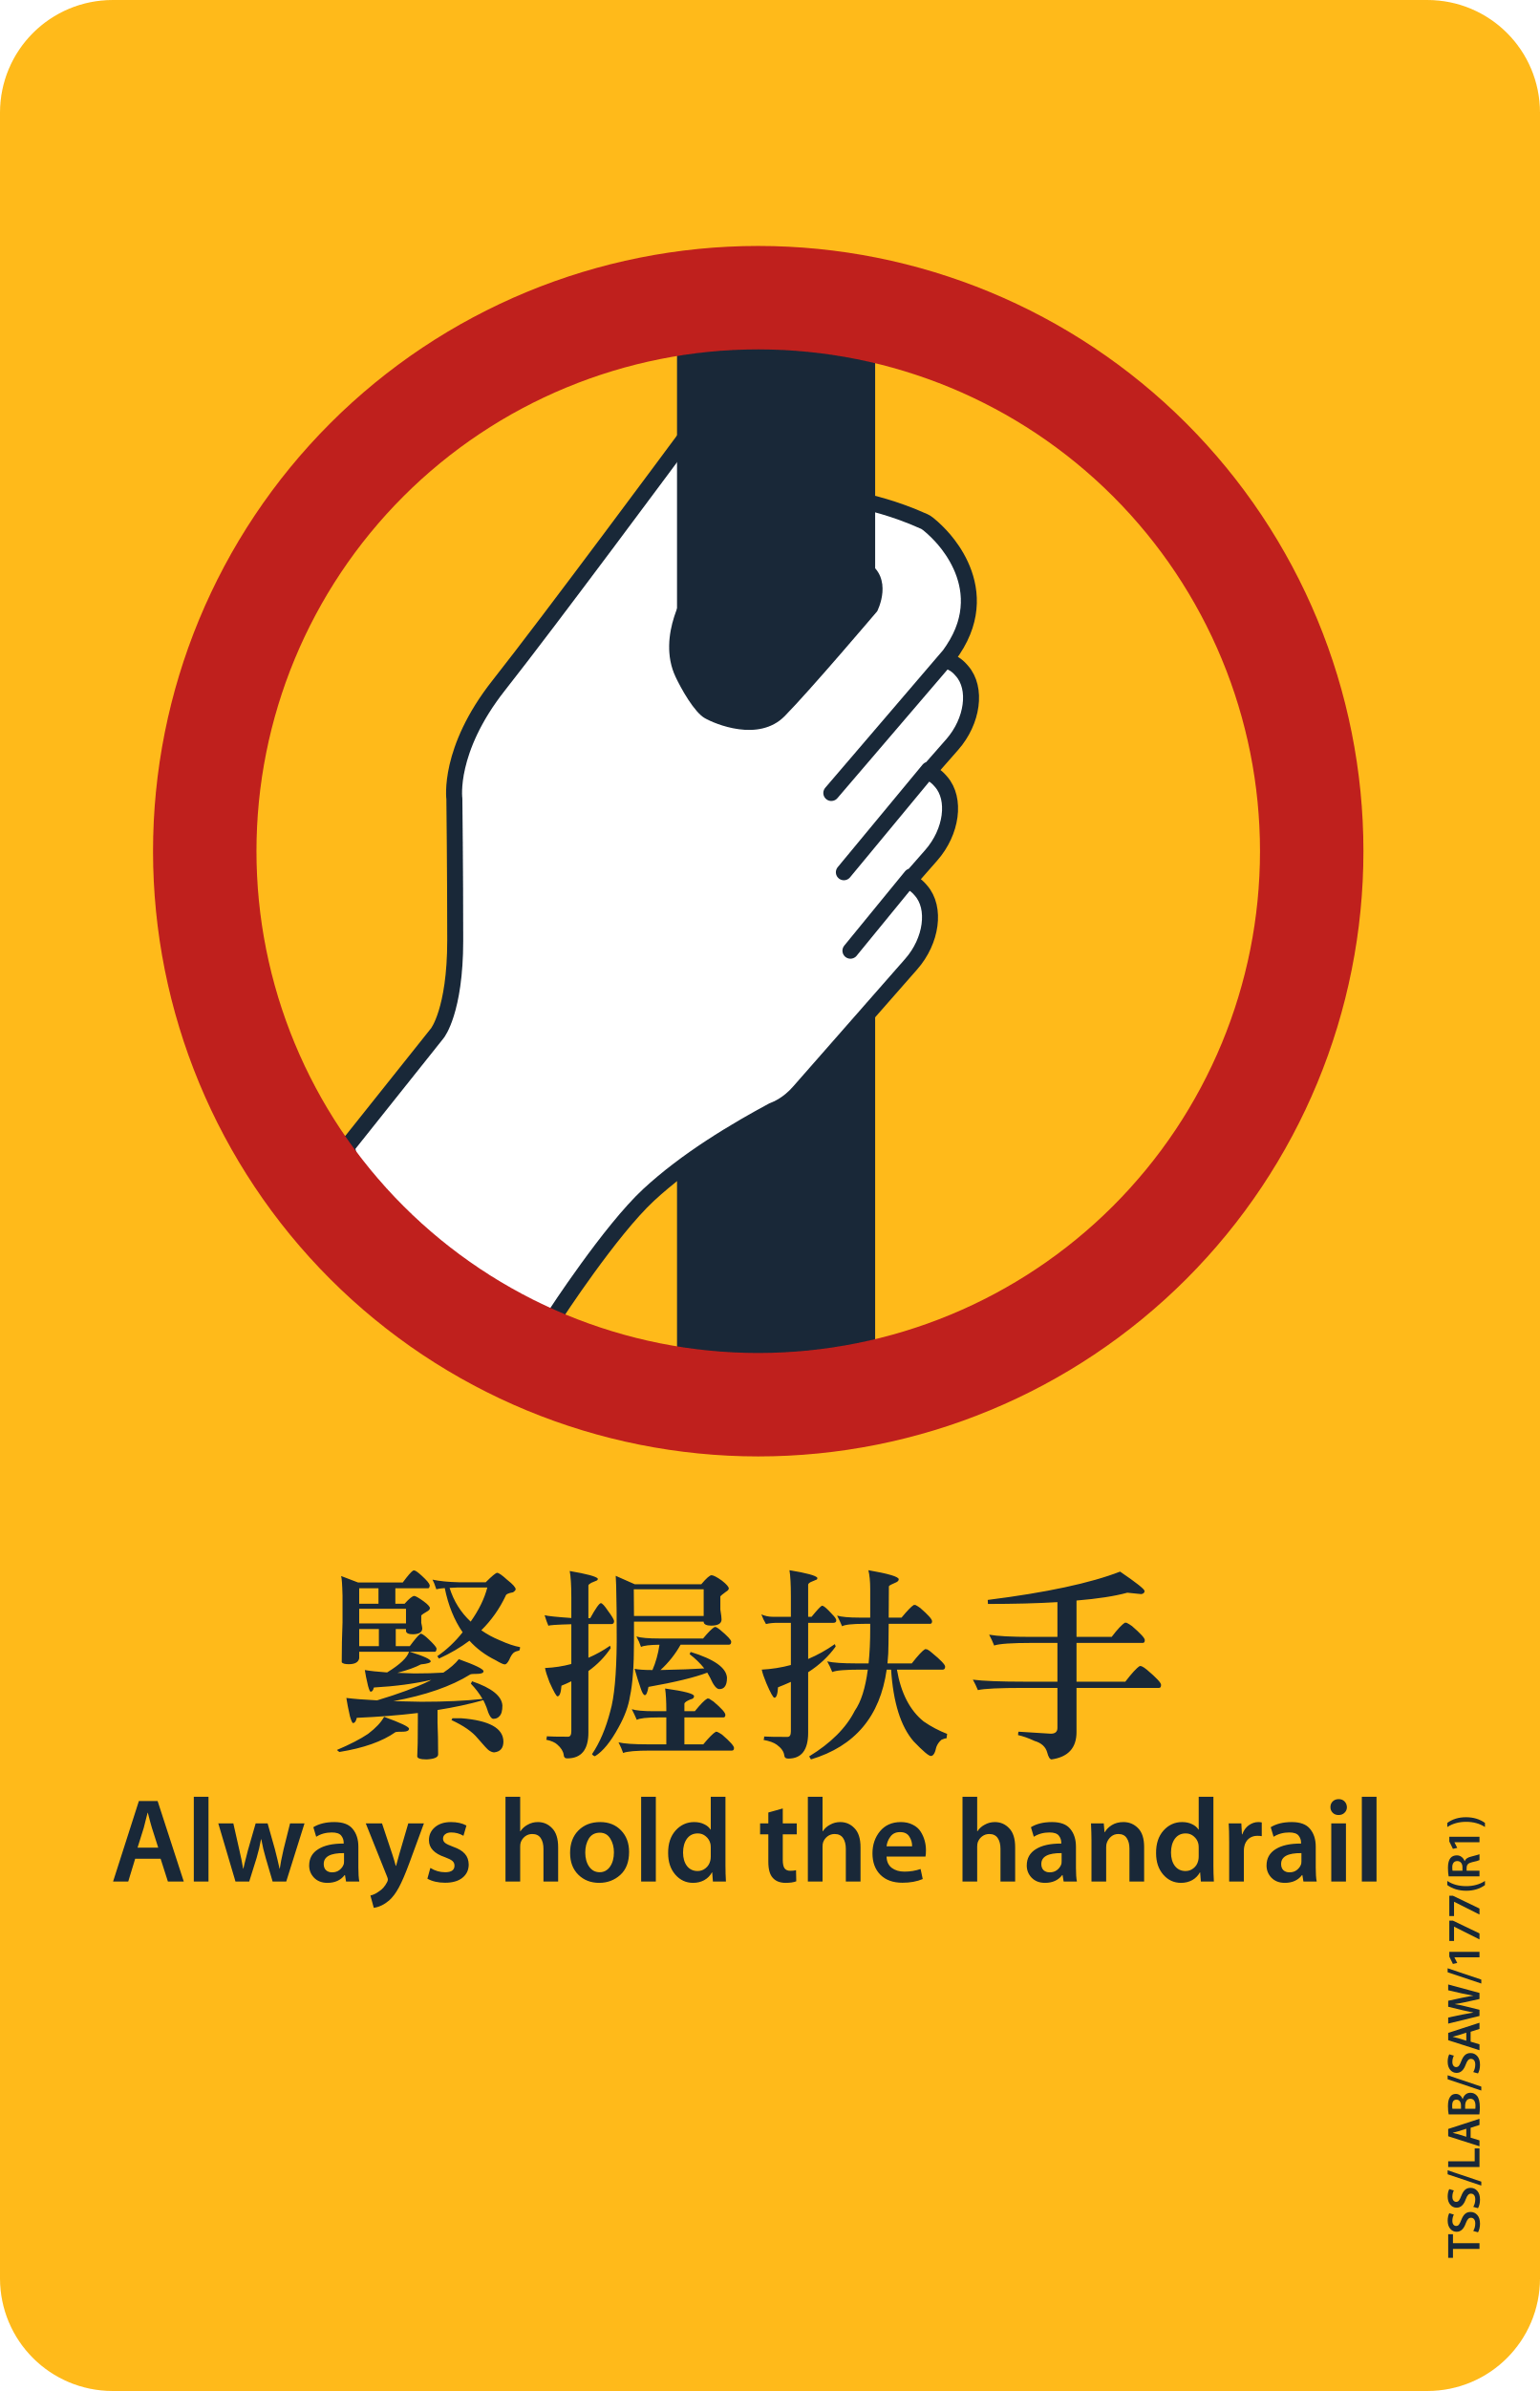 MTR 'Always hold the Handrail' sticker (Light Rail)